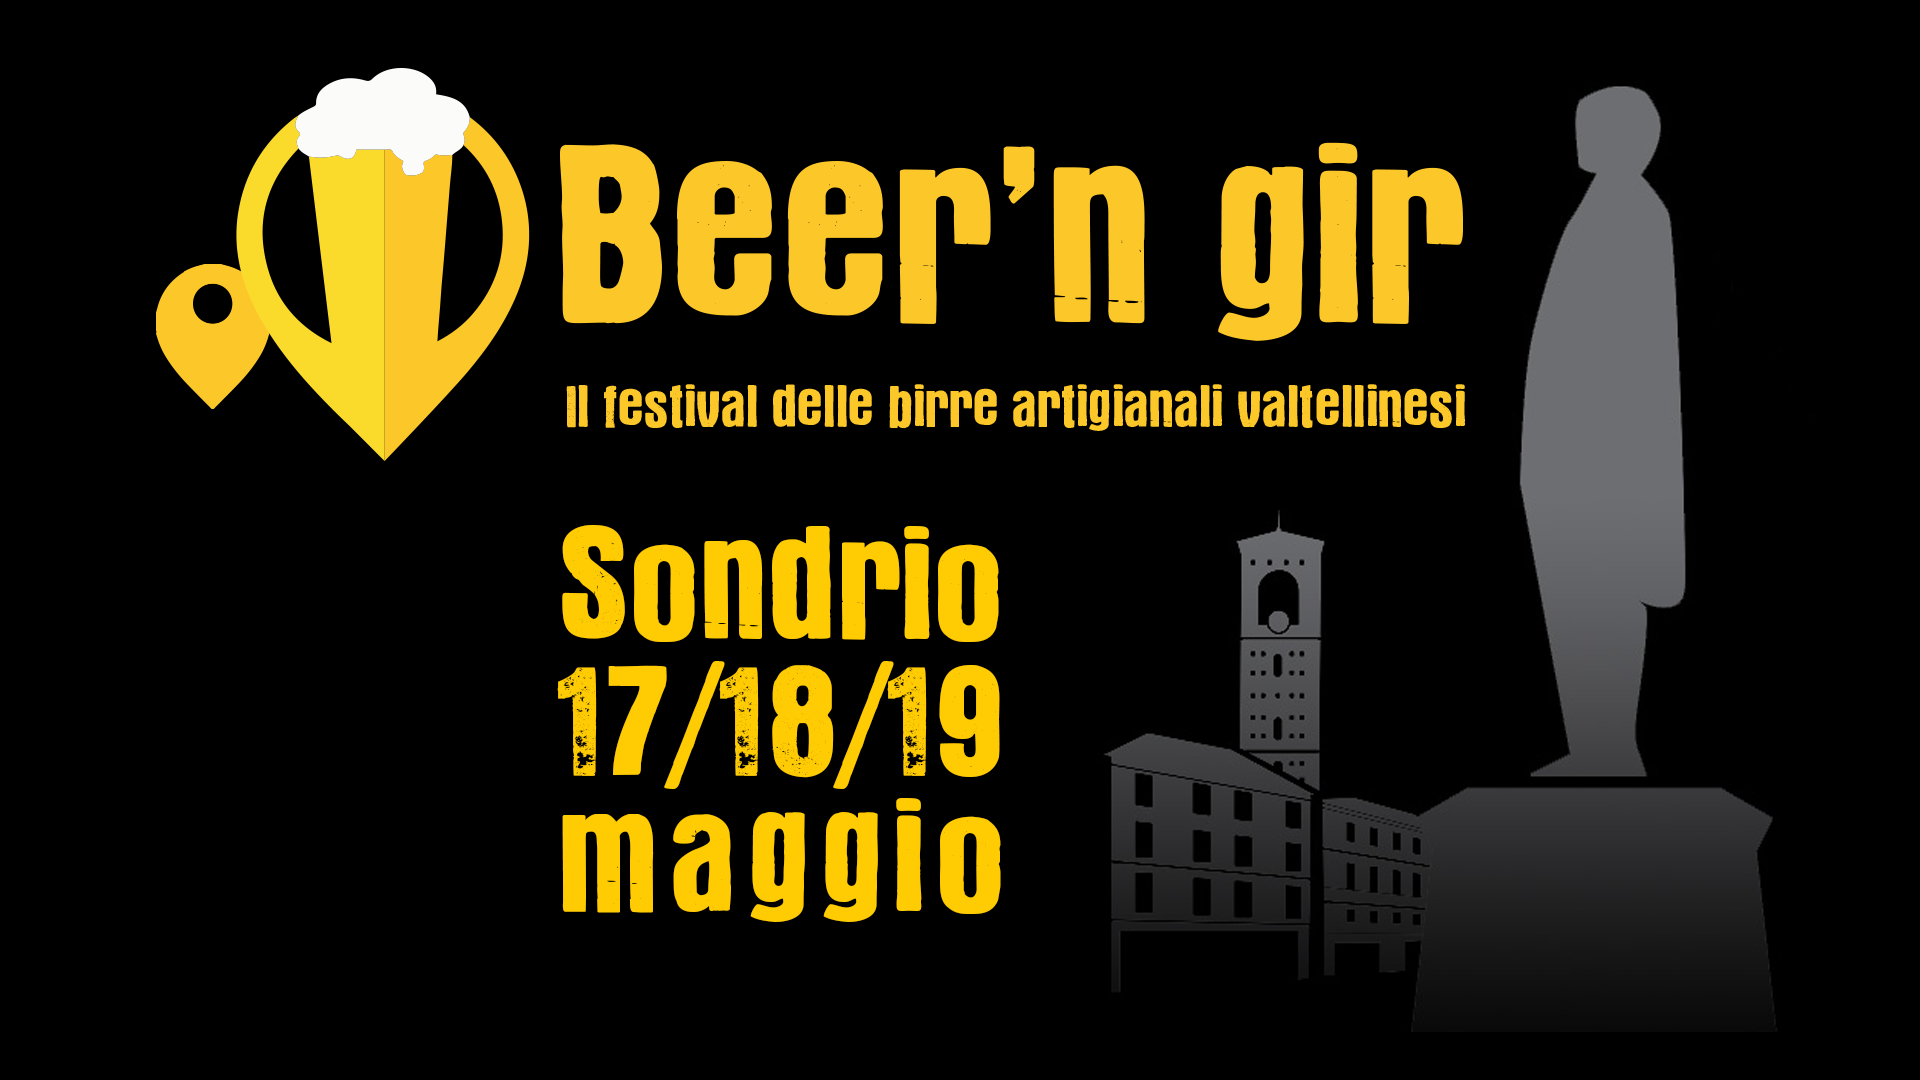 Beer’n gir, il festival delle birre artigiani valtellinesi a Sondrio!